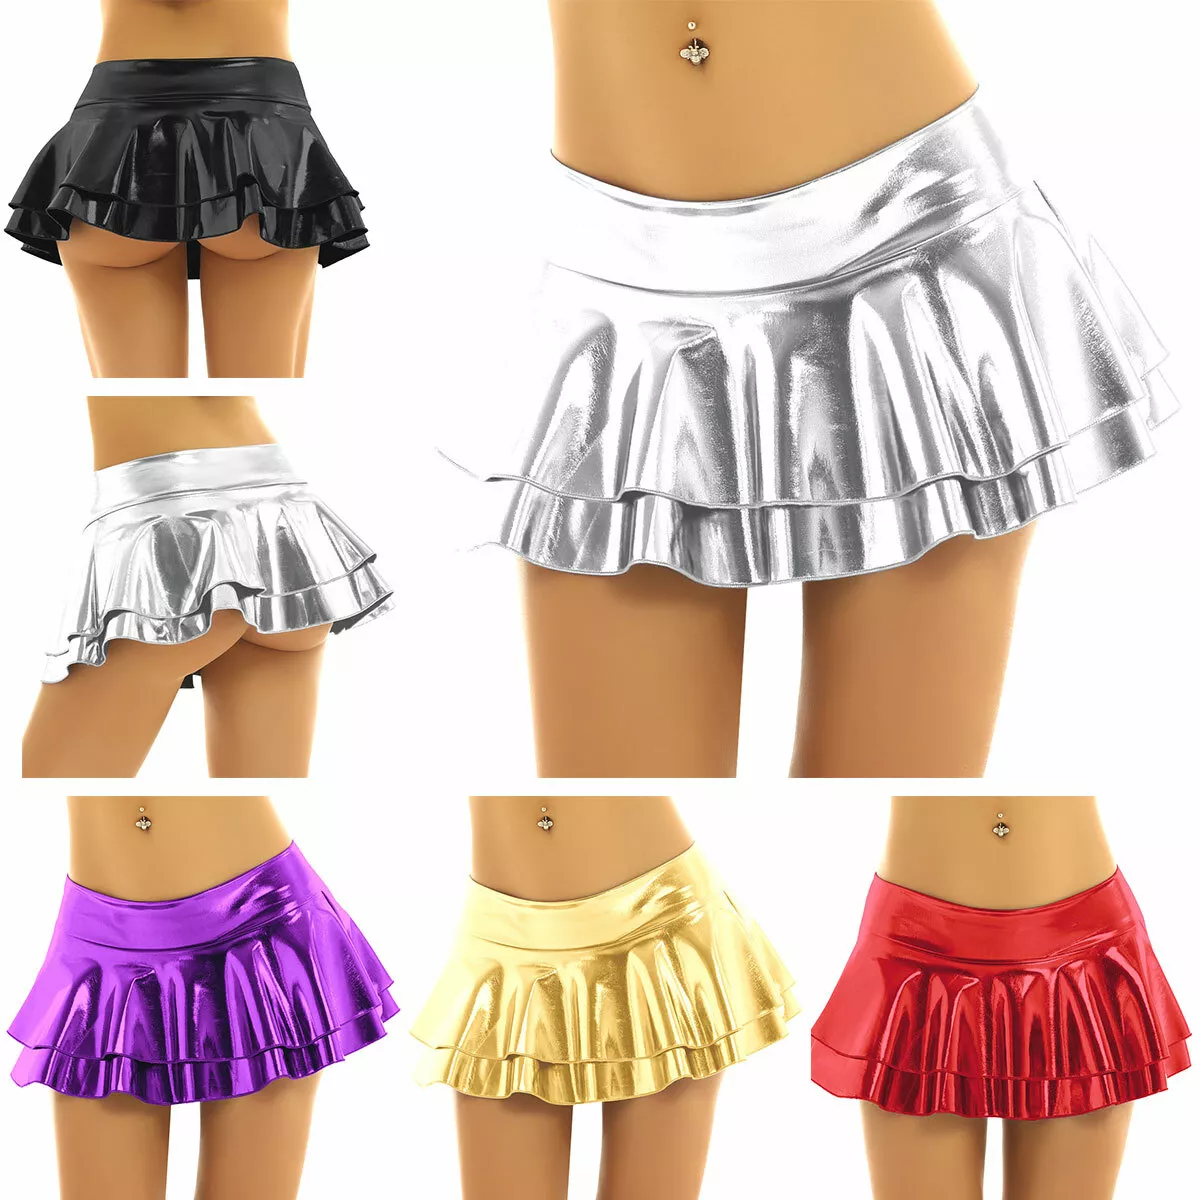 derek cowart add short skirt panty pics photo